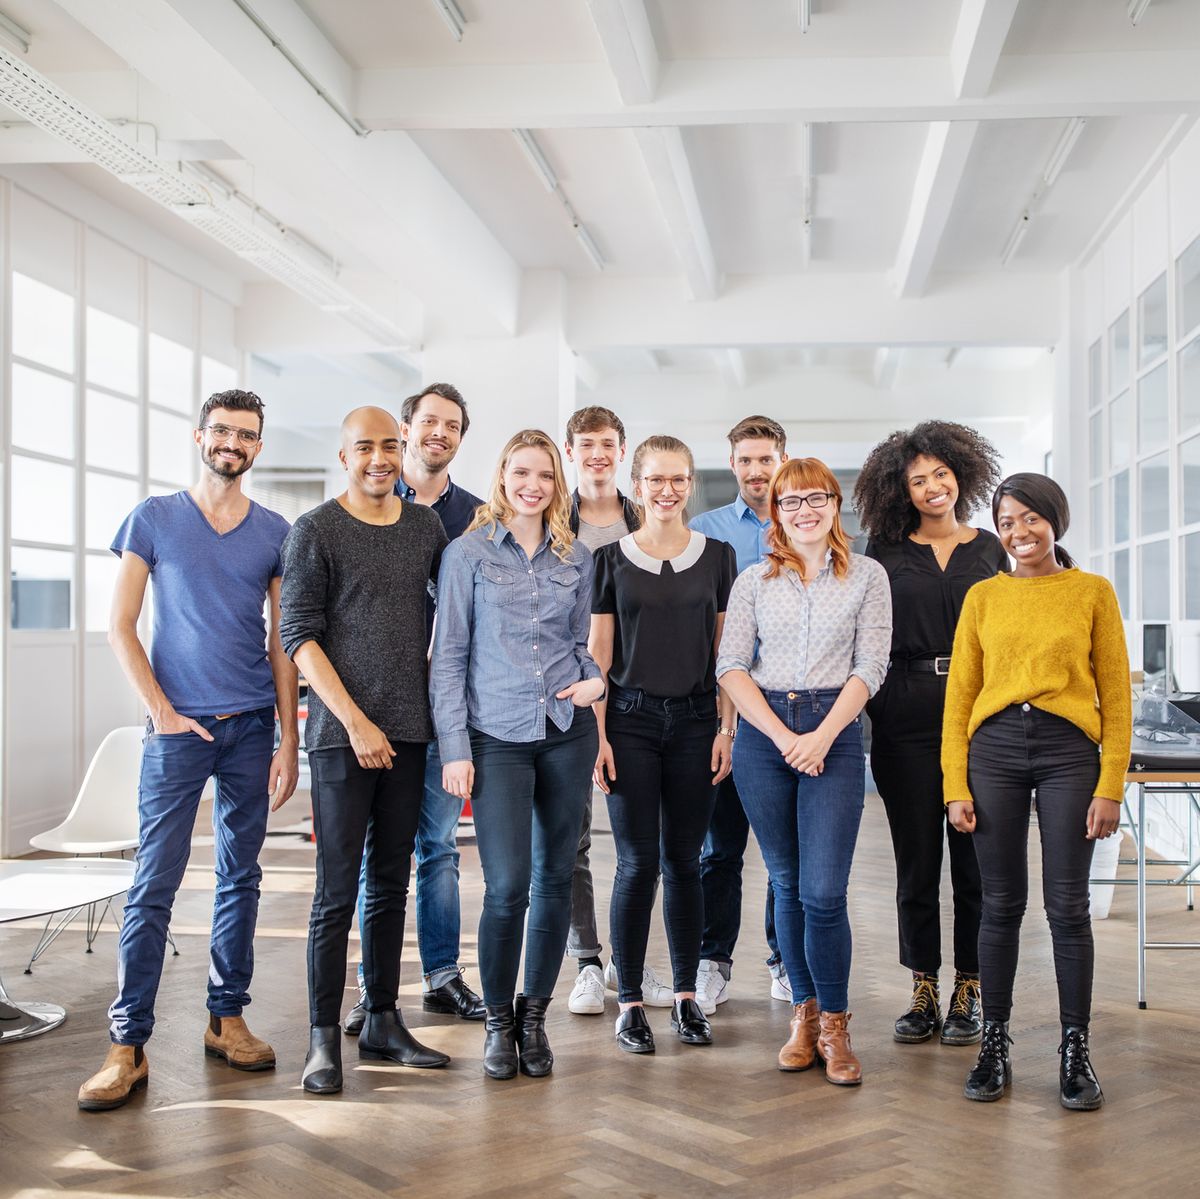 millennial definition - Portrait of successful business team